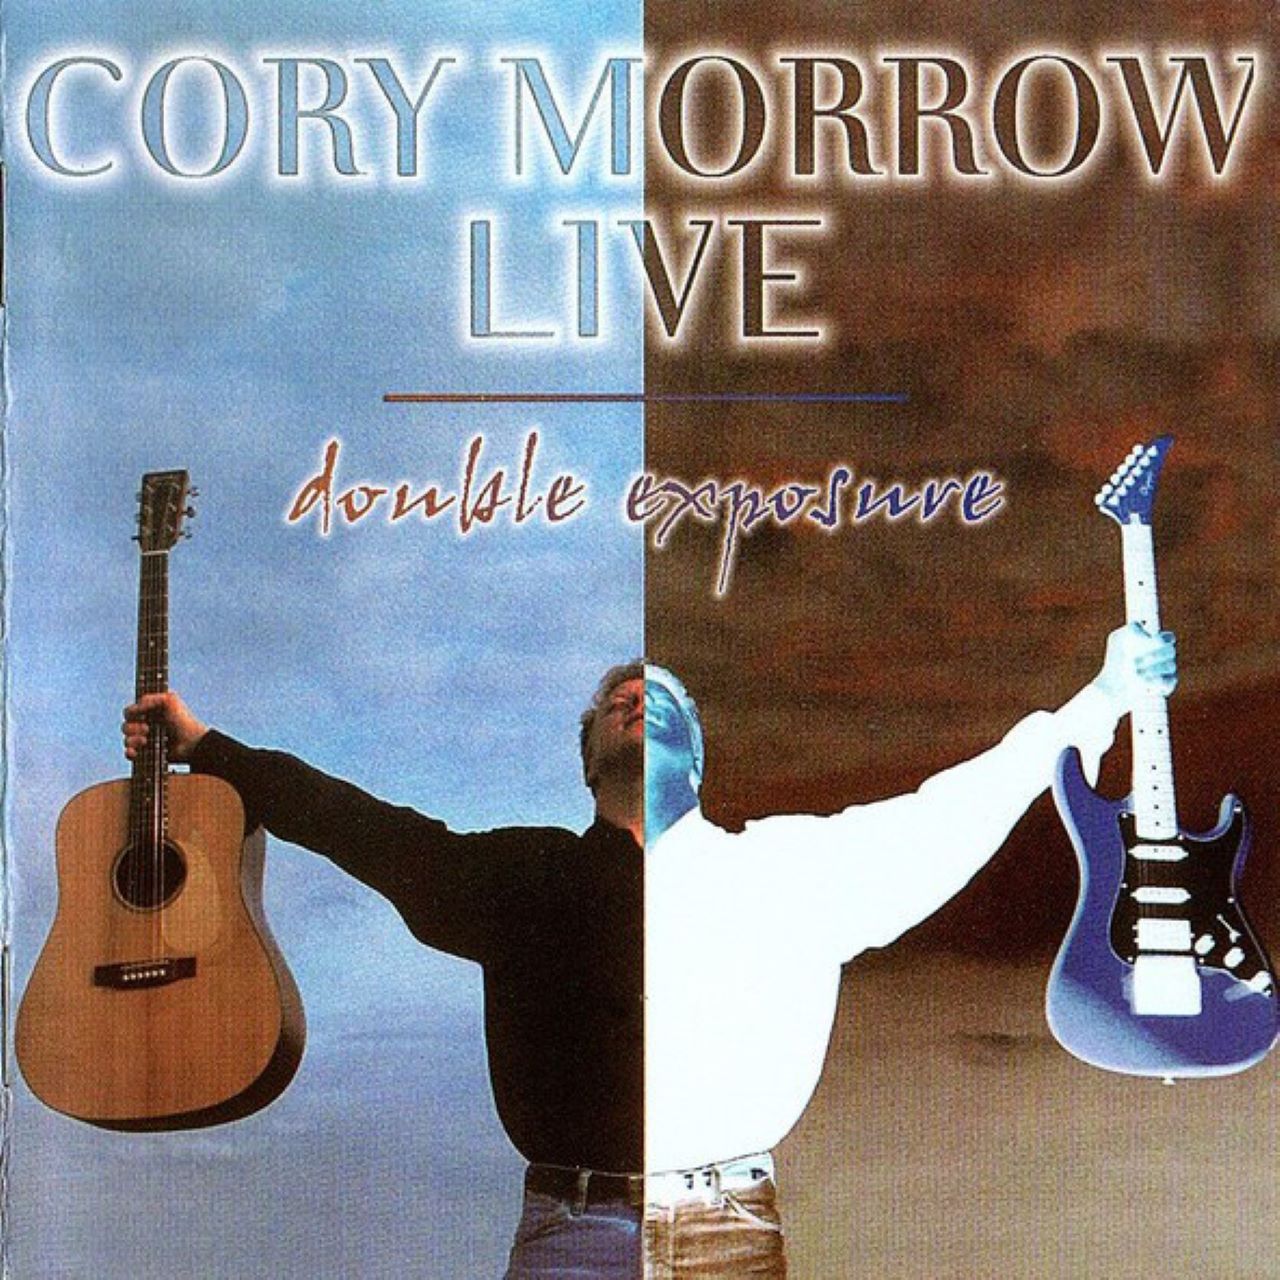 Cory Morrow - Live, Double Exposure cover album